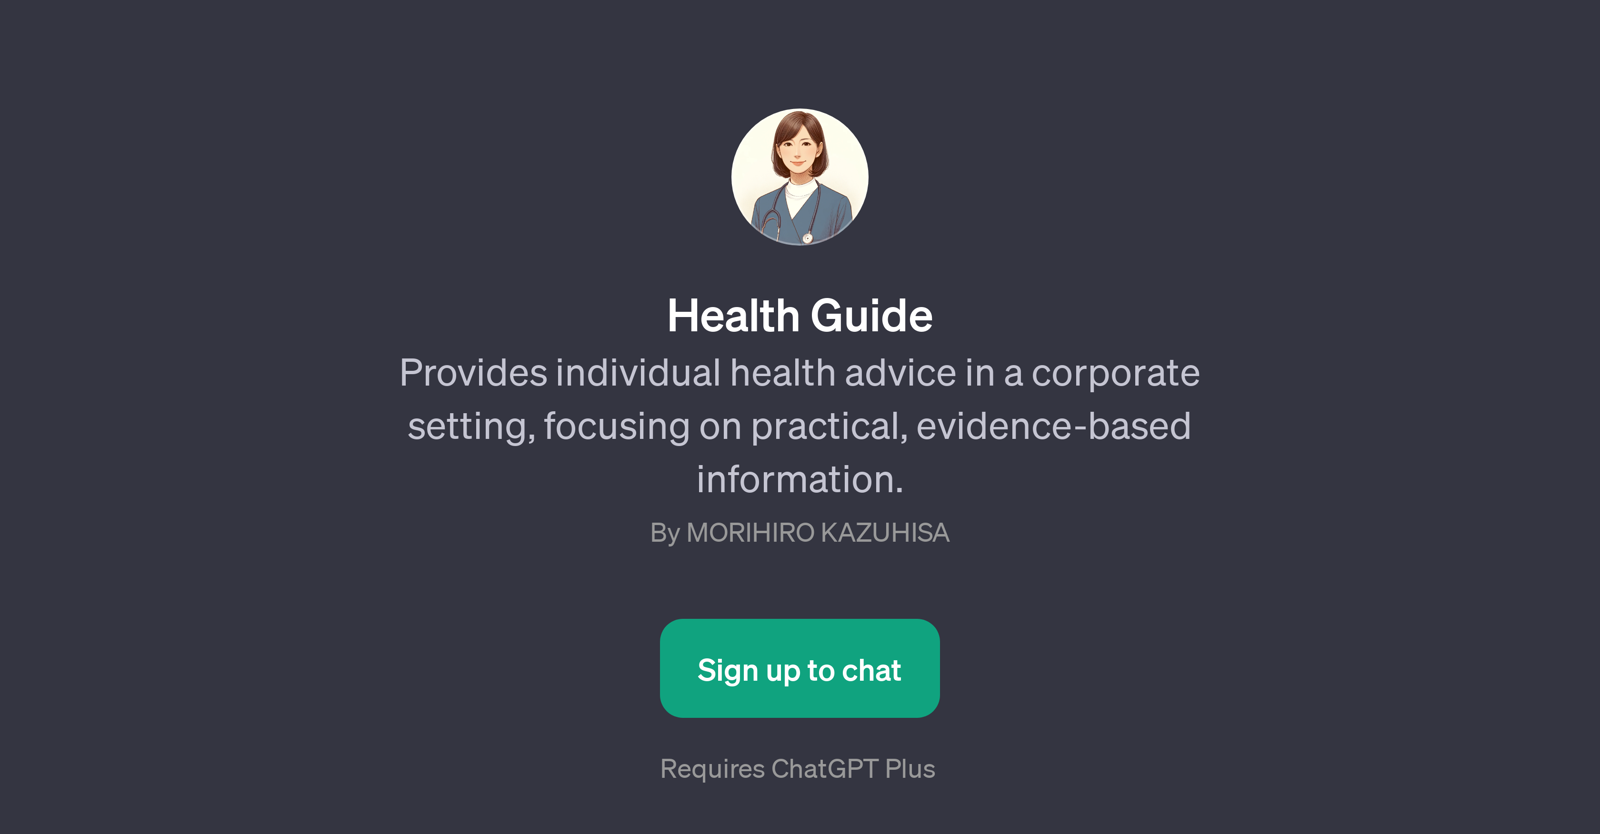 Health Guide website